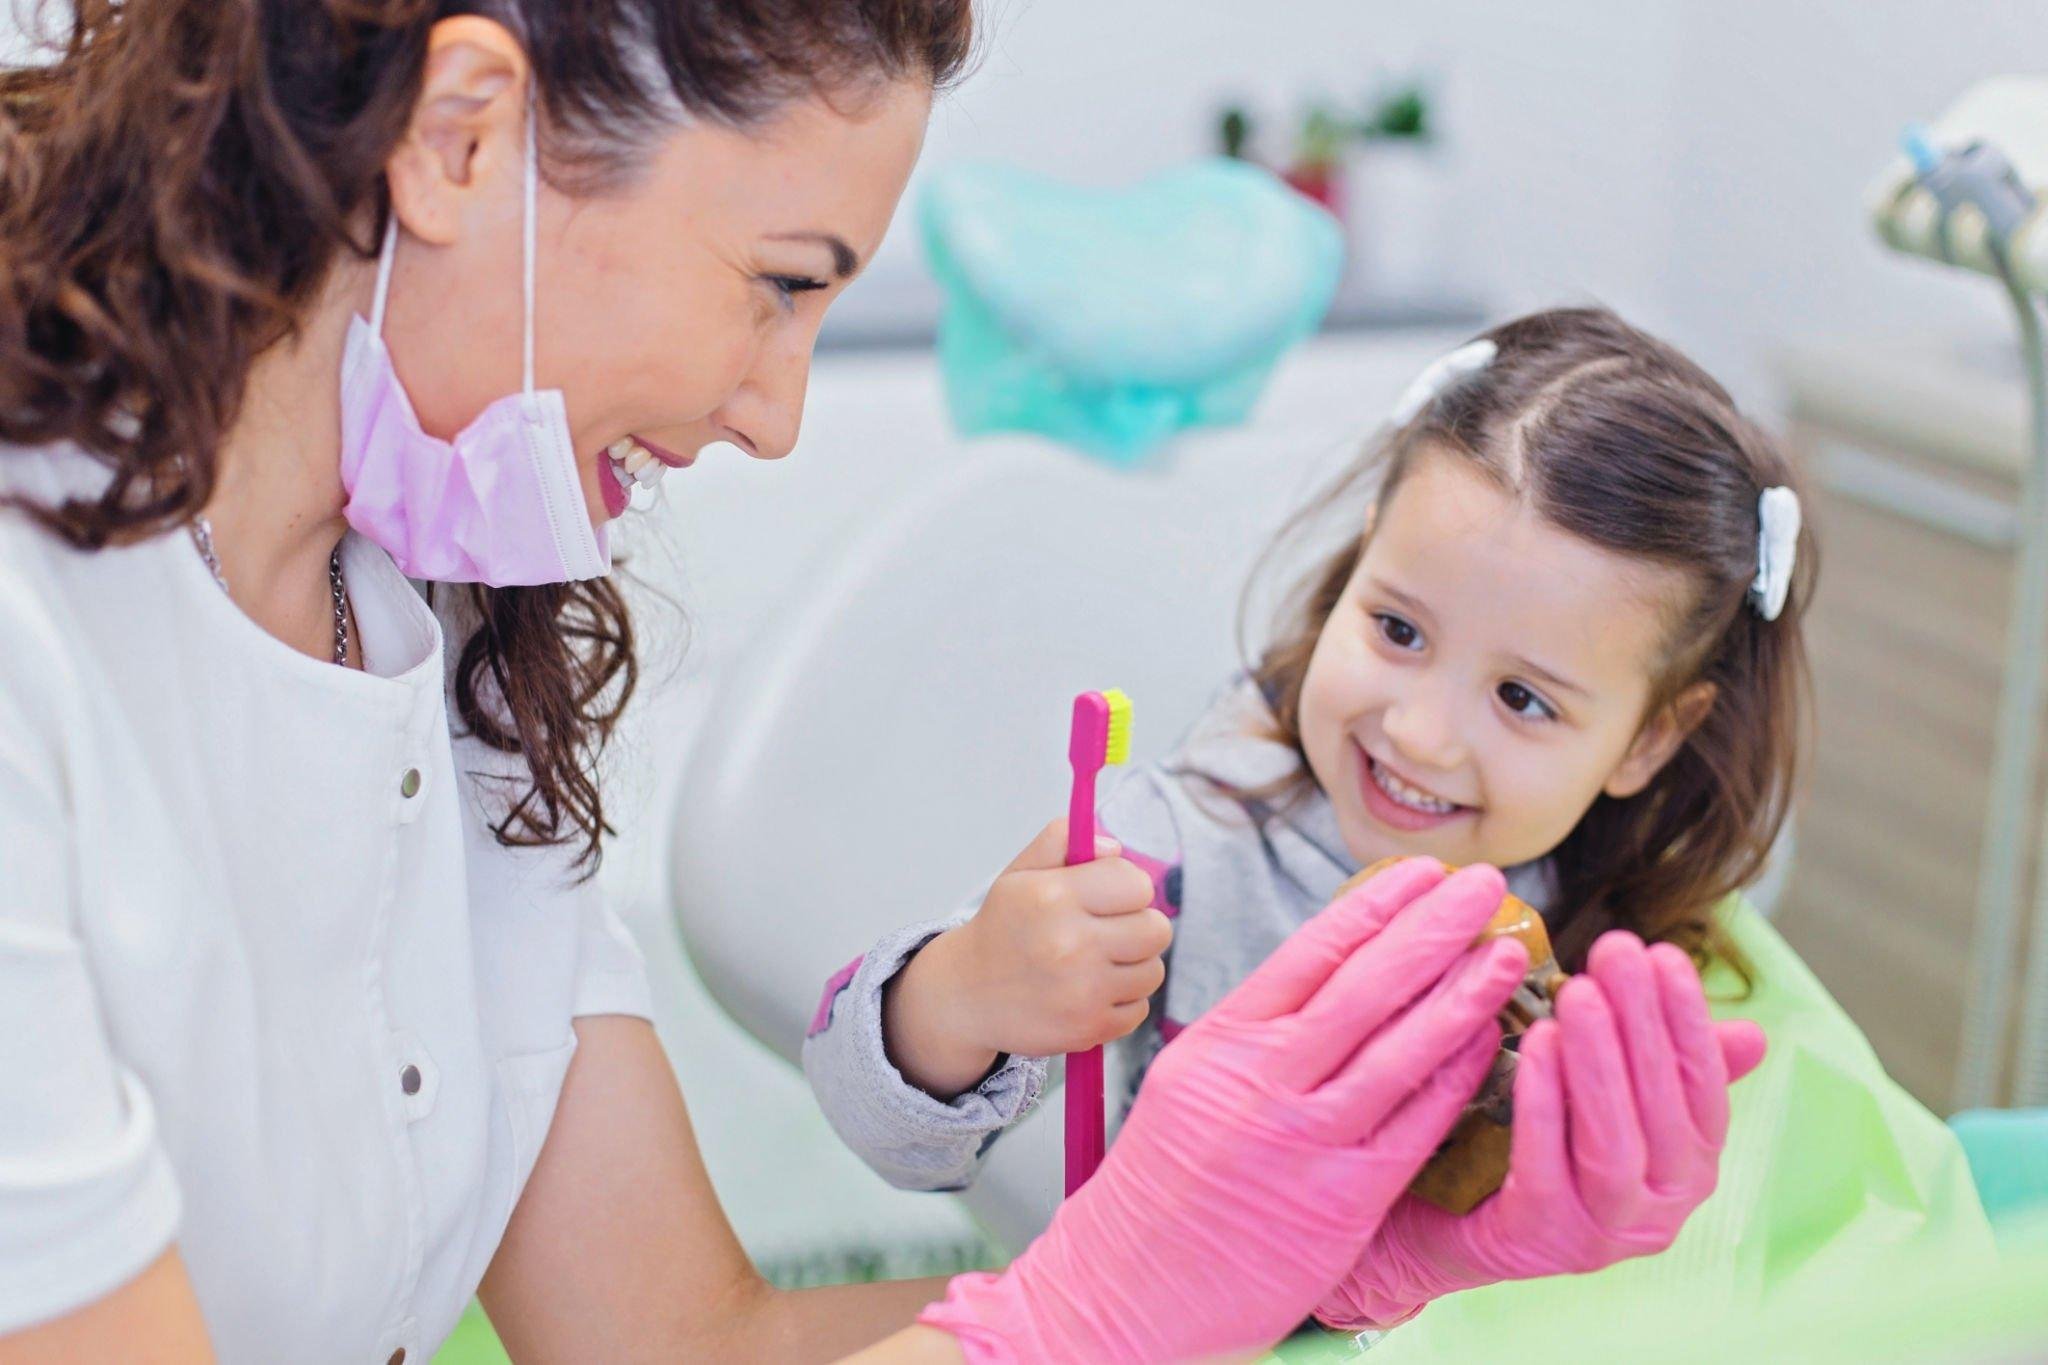 “Smile Bright: Pediatric Dentistry & Gentle Laser Skin Resurfacing for Kids”